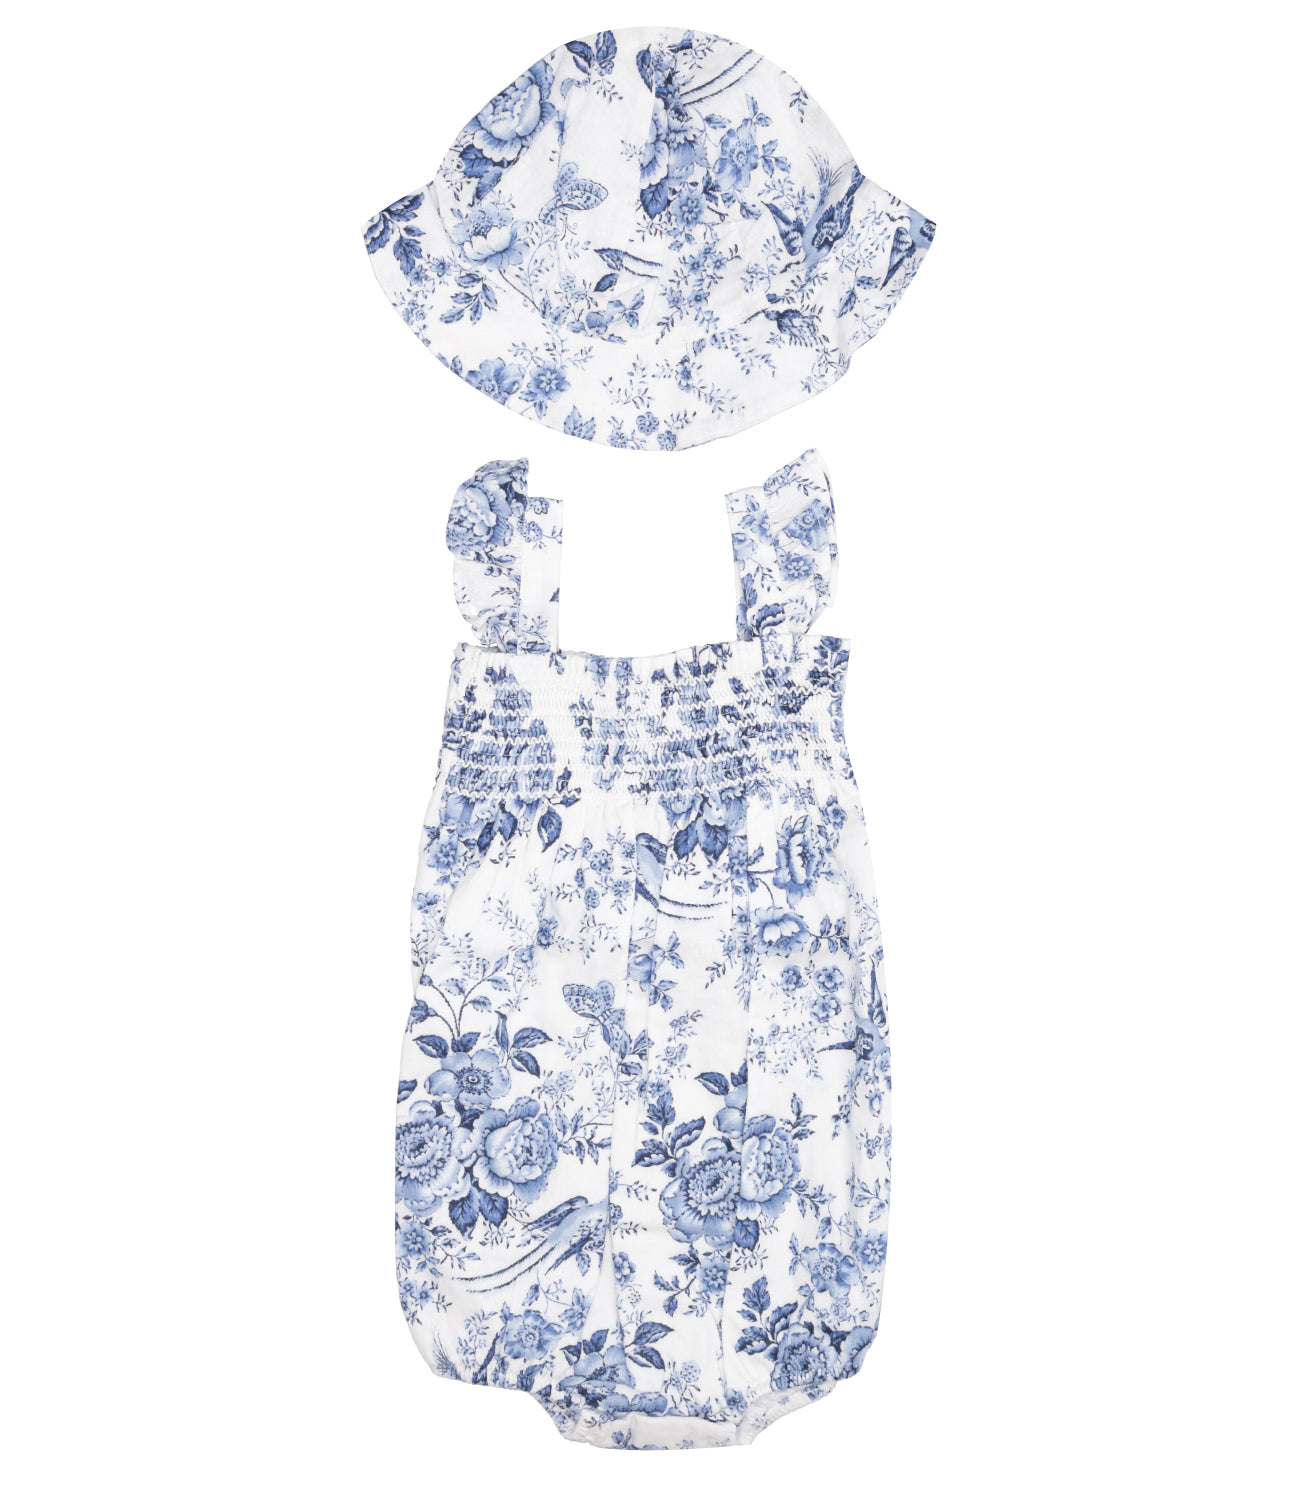 Ralph Lauren Childrenswear | Blue and White Romper Suit